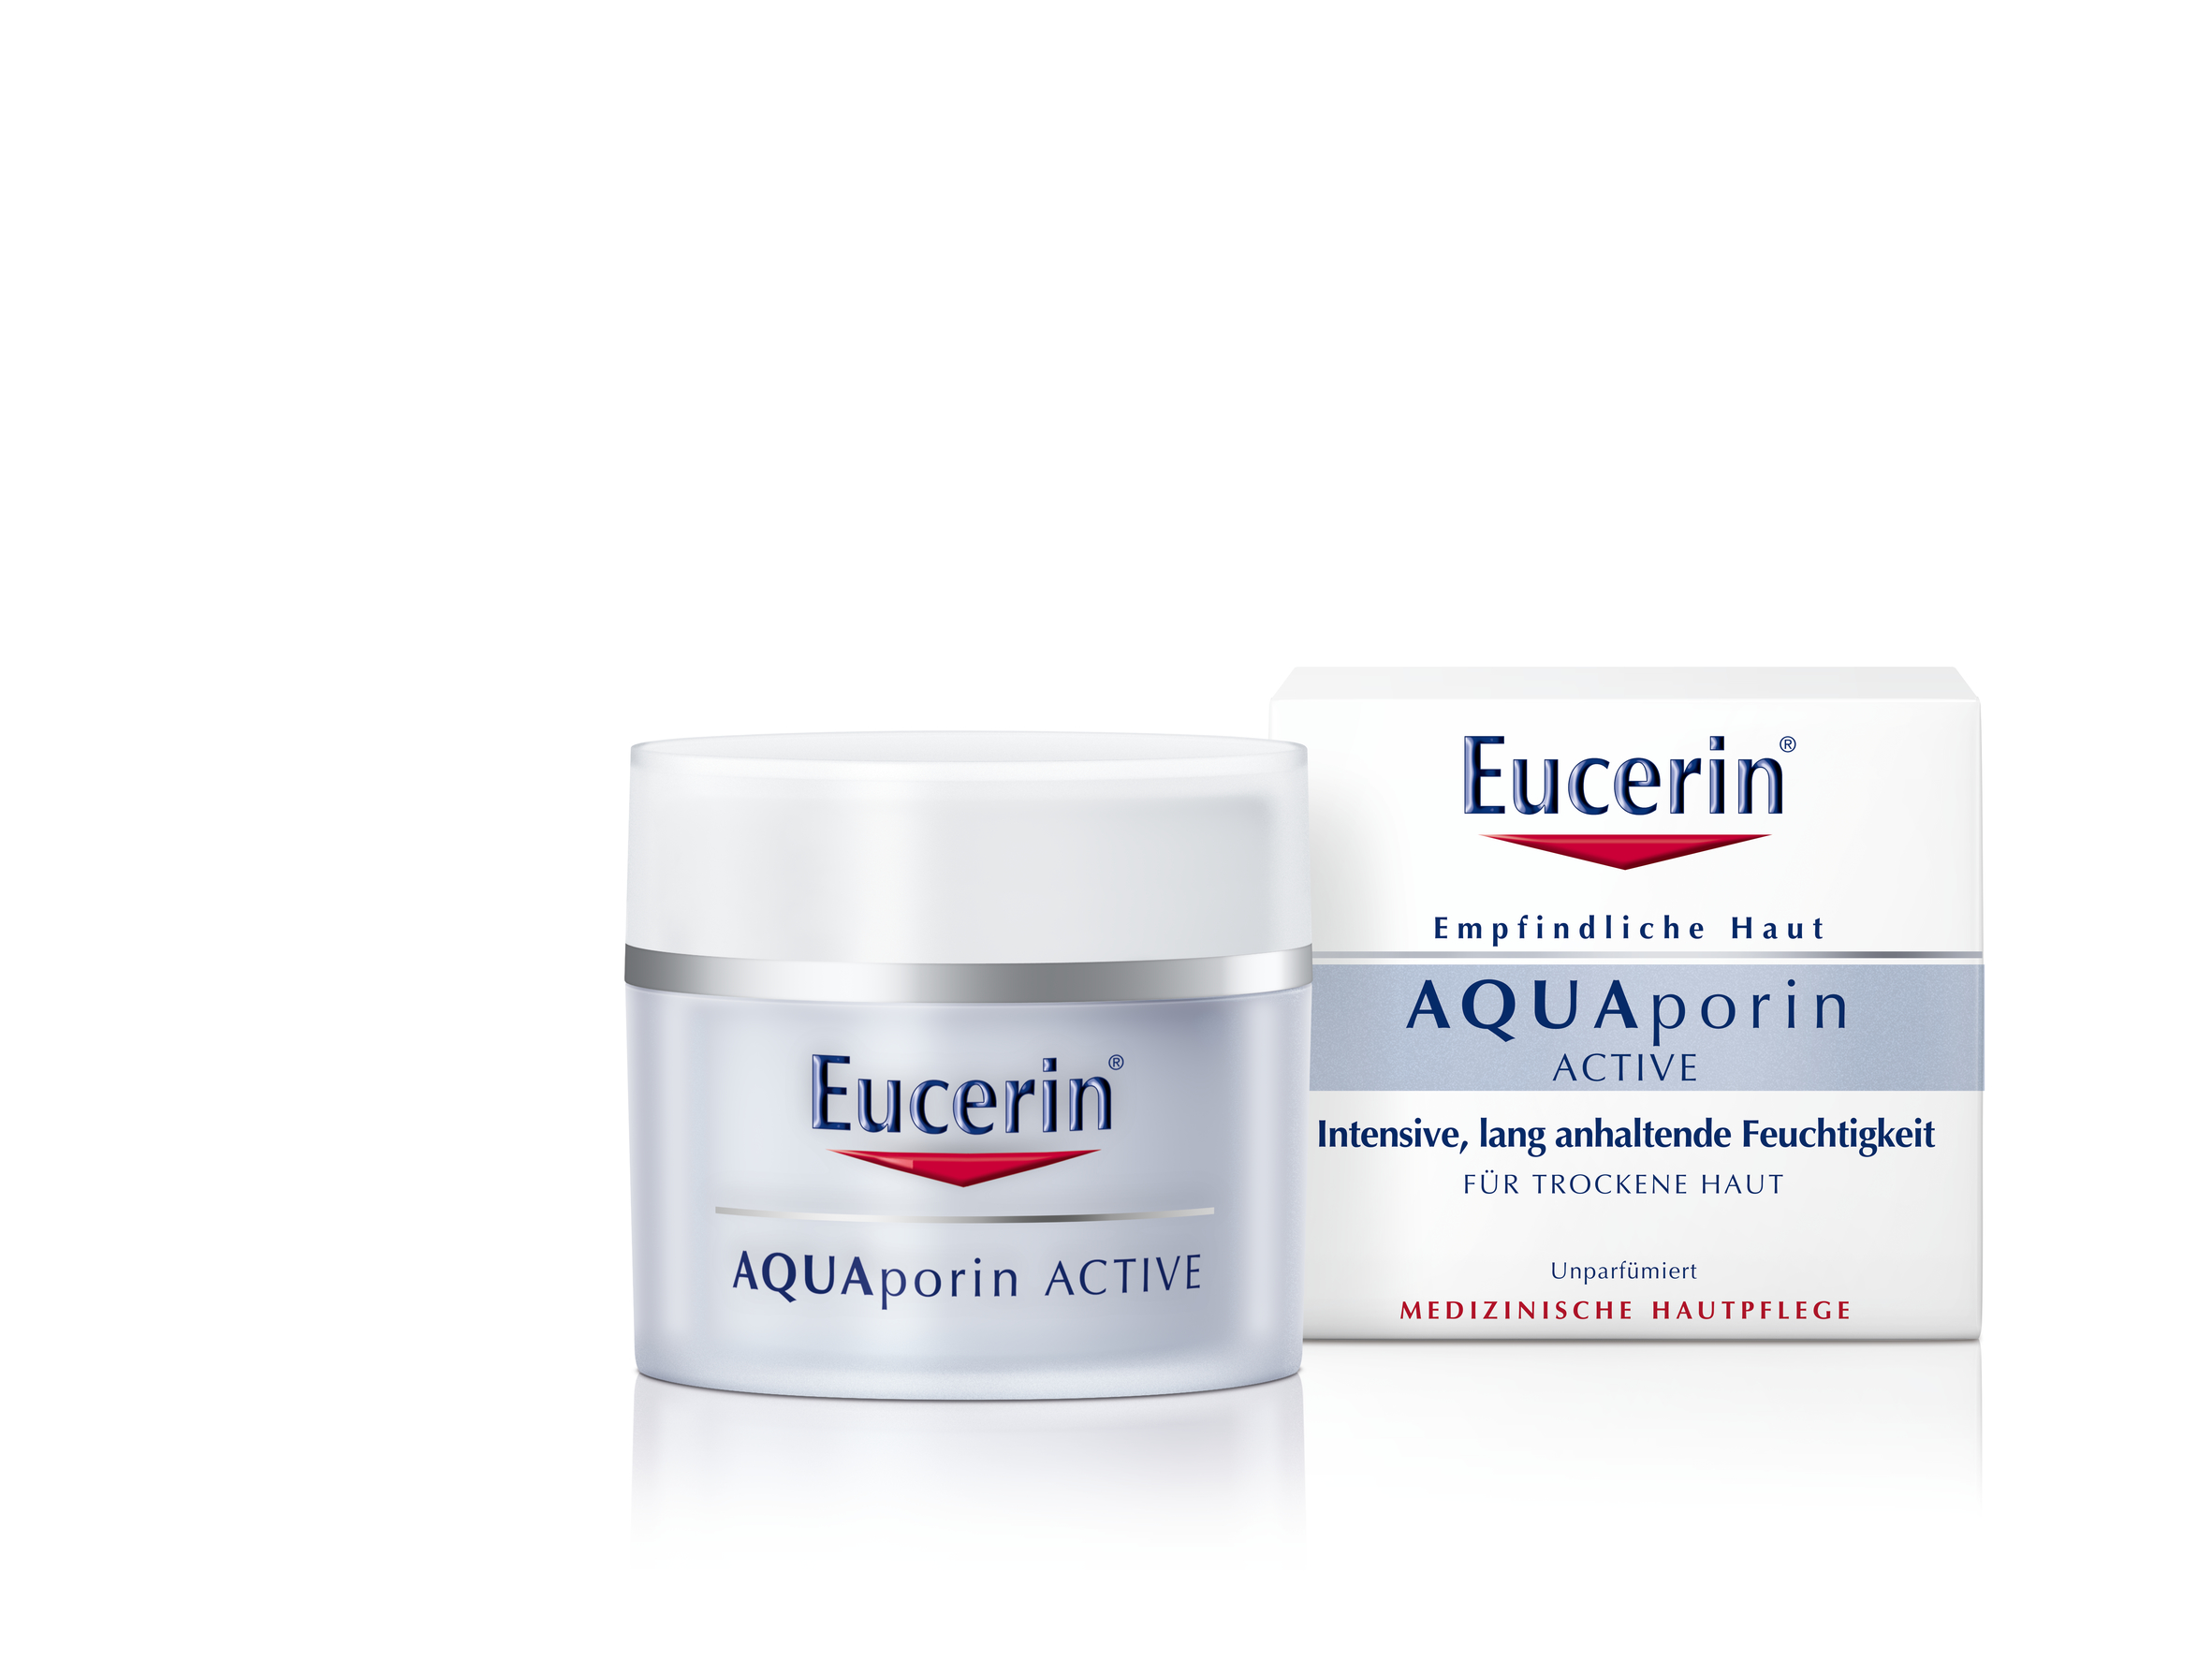 Eucerin Aquaporin Active Creme trockene Haut (50 ml)